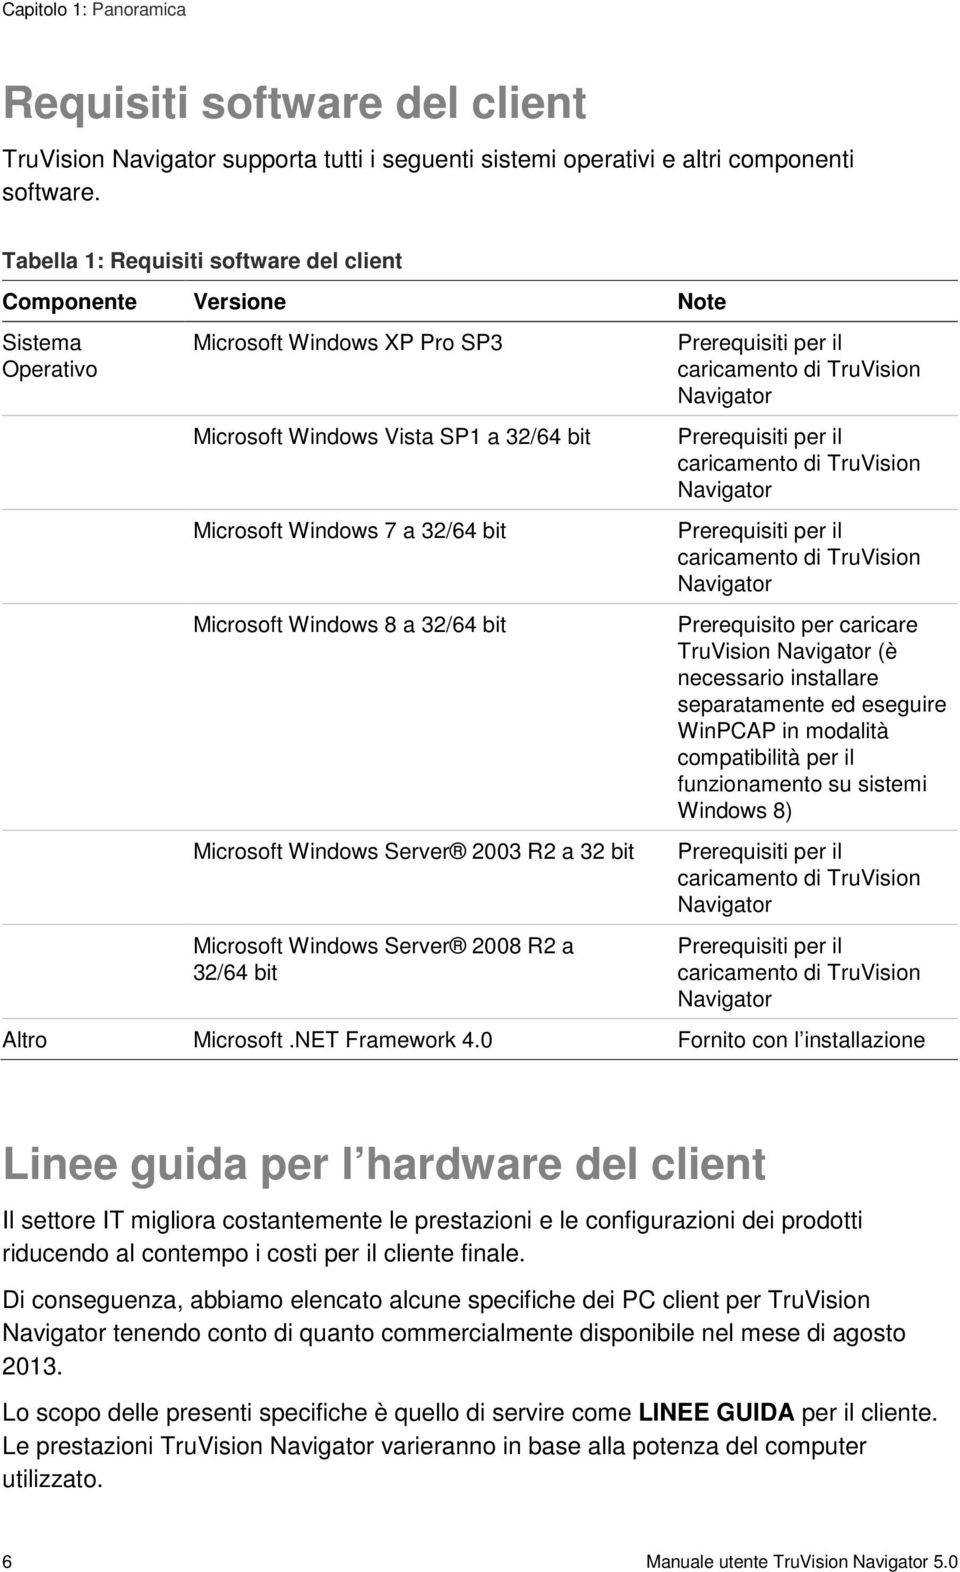 Windows 8 a 32/64 bit Microsoft Windows Server 2003 R2 a 32 bit Microsoft Windows Server 2008 R2 a 32/64 bit Prerequisiti per il caricamento di TruVision Navigator Prerequisiti per il caricamento di